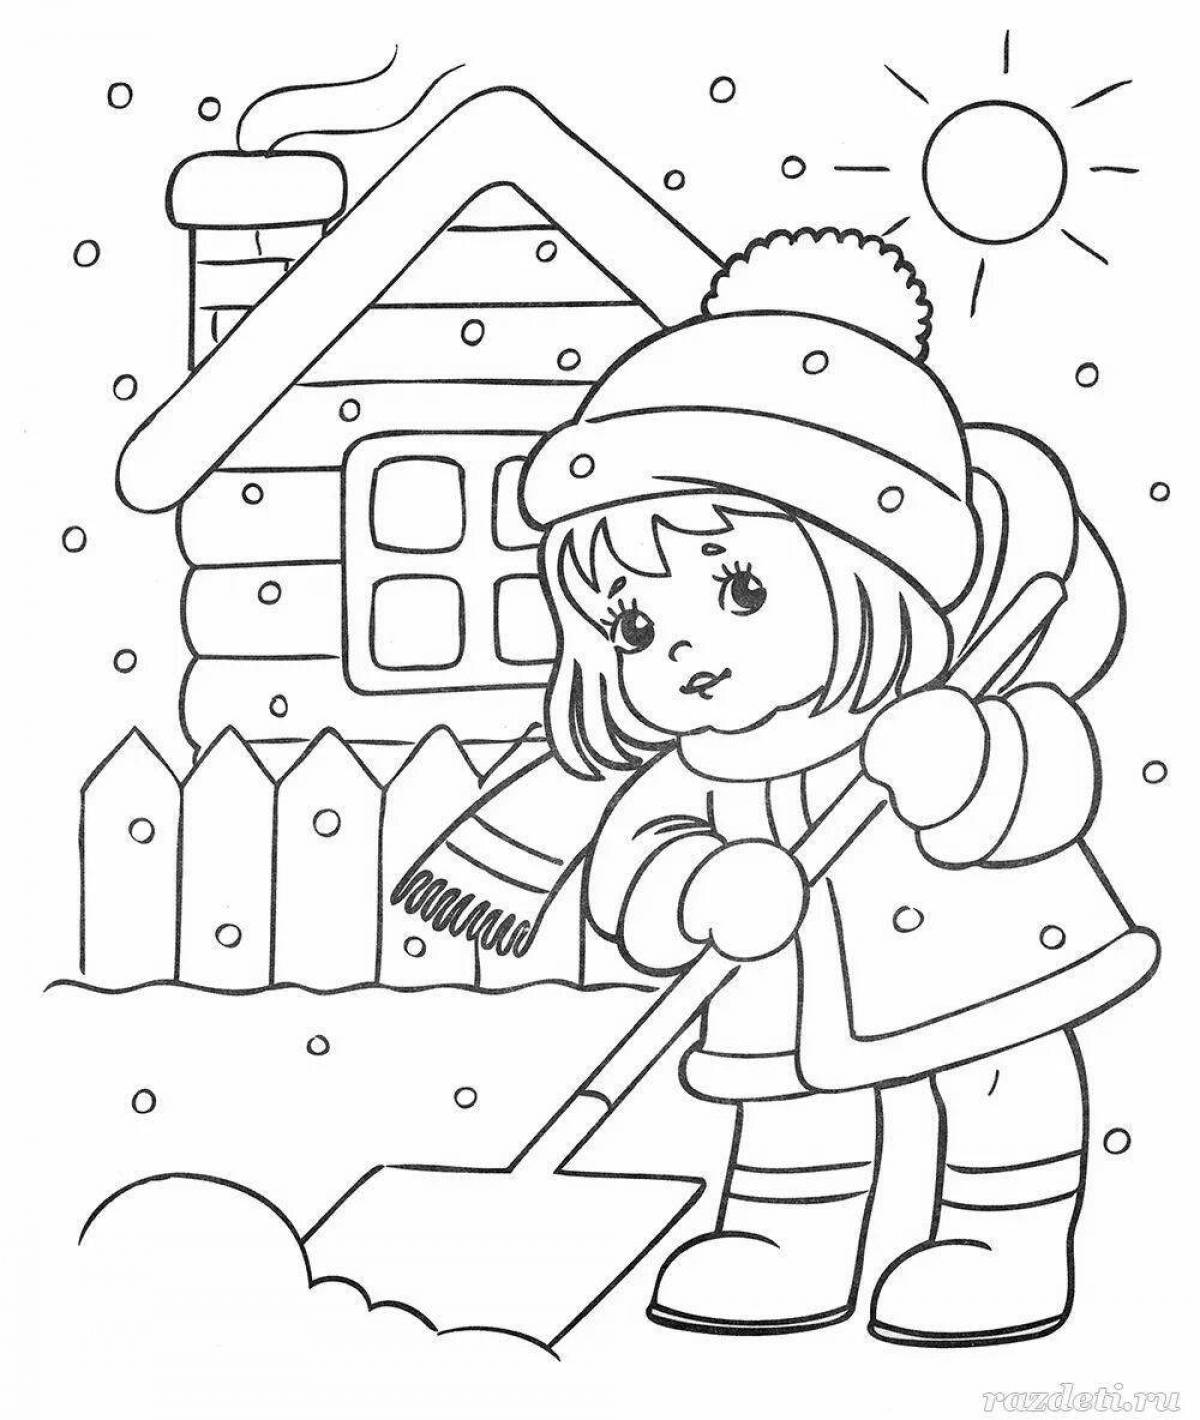 Inviting winter coloring book for preschoolers